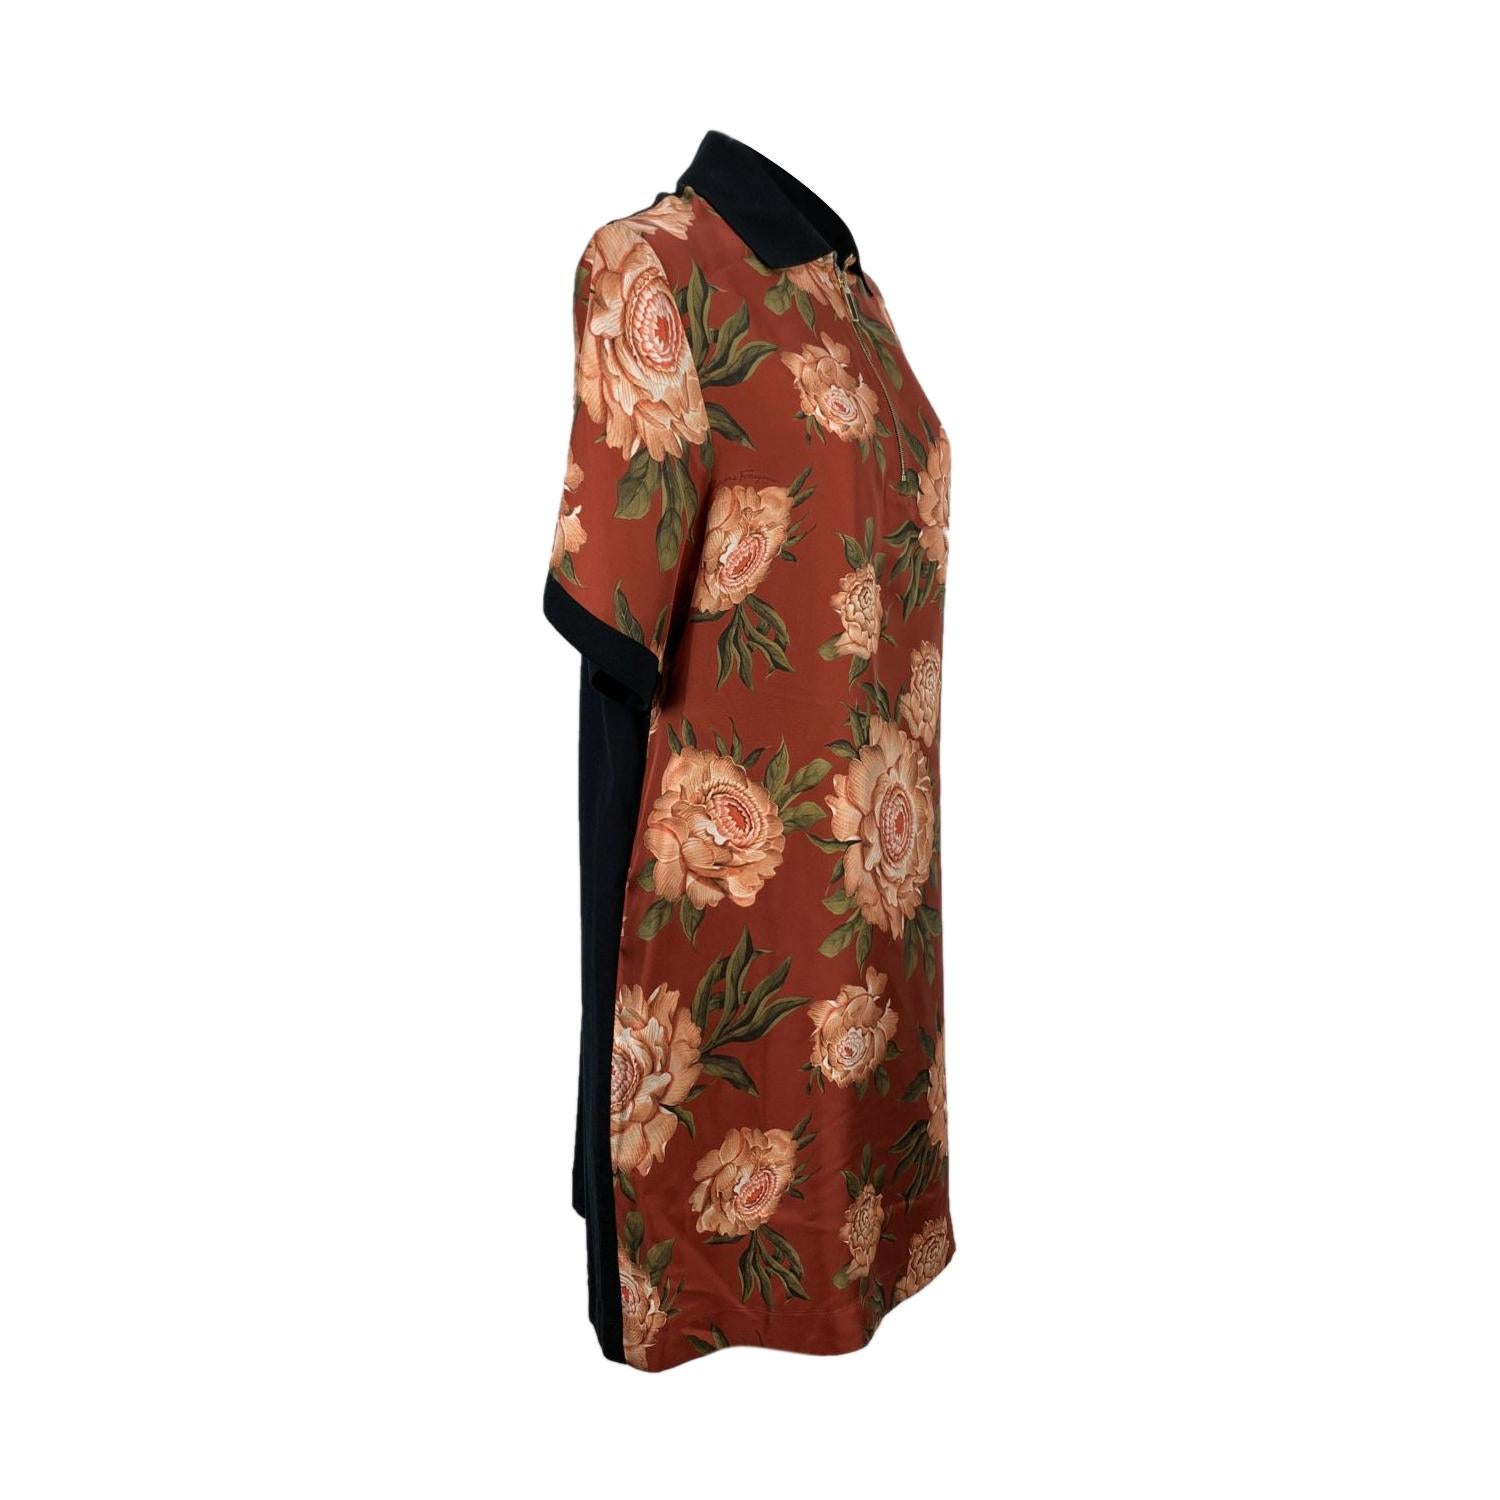 Brown Salvatore Ferragamo Floral Silk and Cotton T-Shirt Dress Size 42 IT